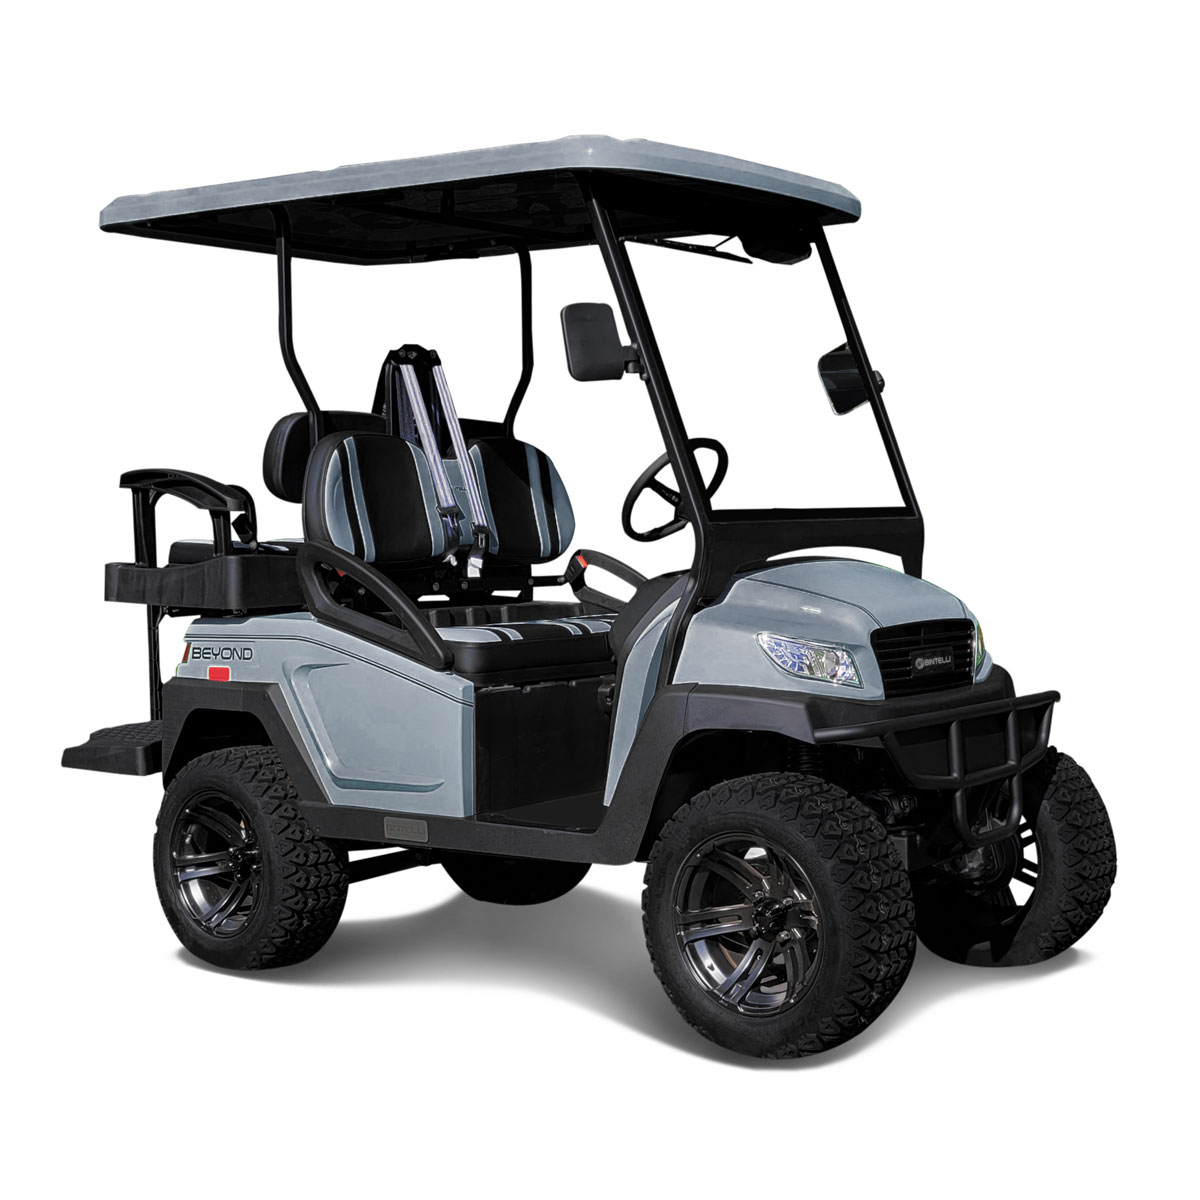 Bintelli Beyond Lifted 4PR street legal golf cart in Titanium